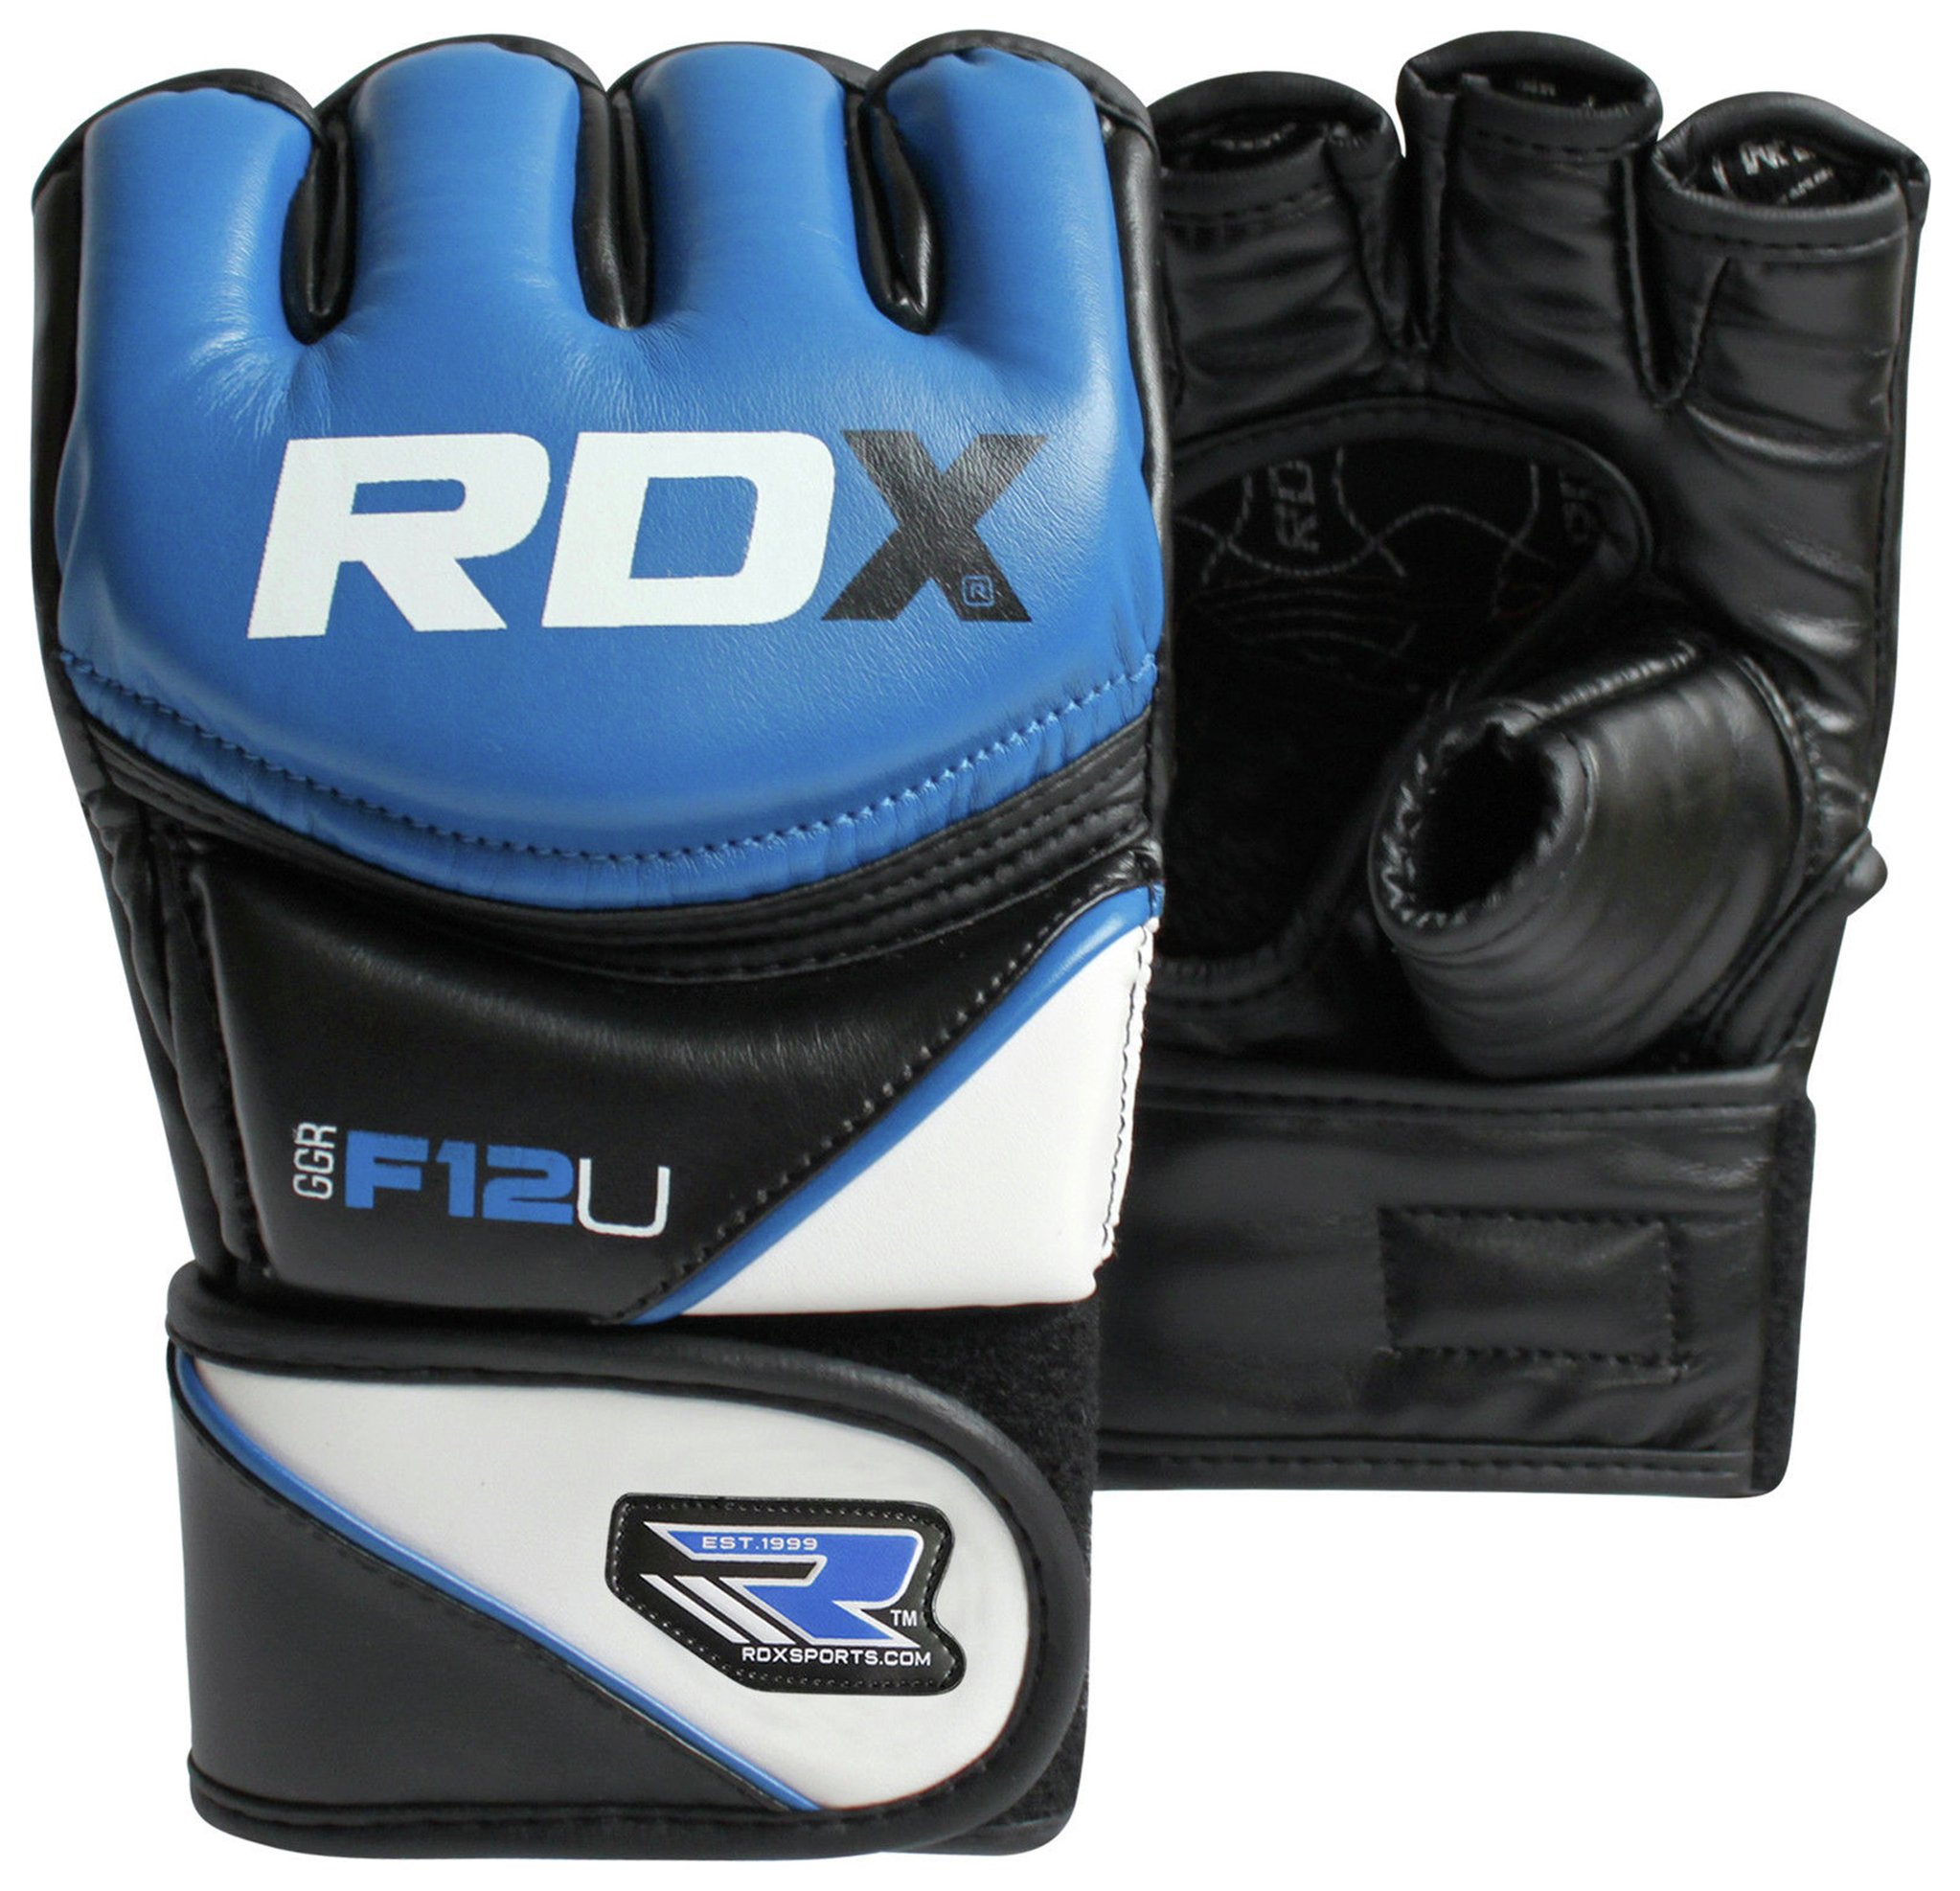 RDX Synthetic Leather MMA Gloves Blue - Medium/Large